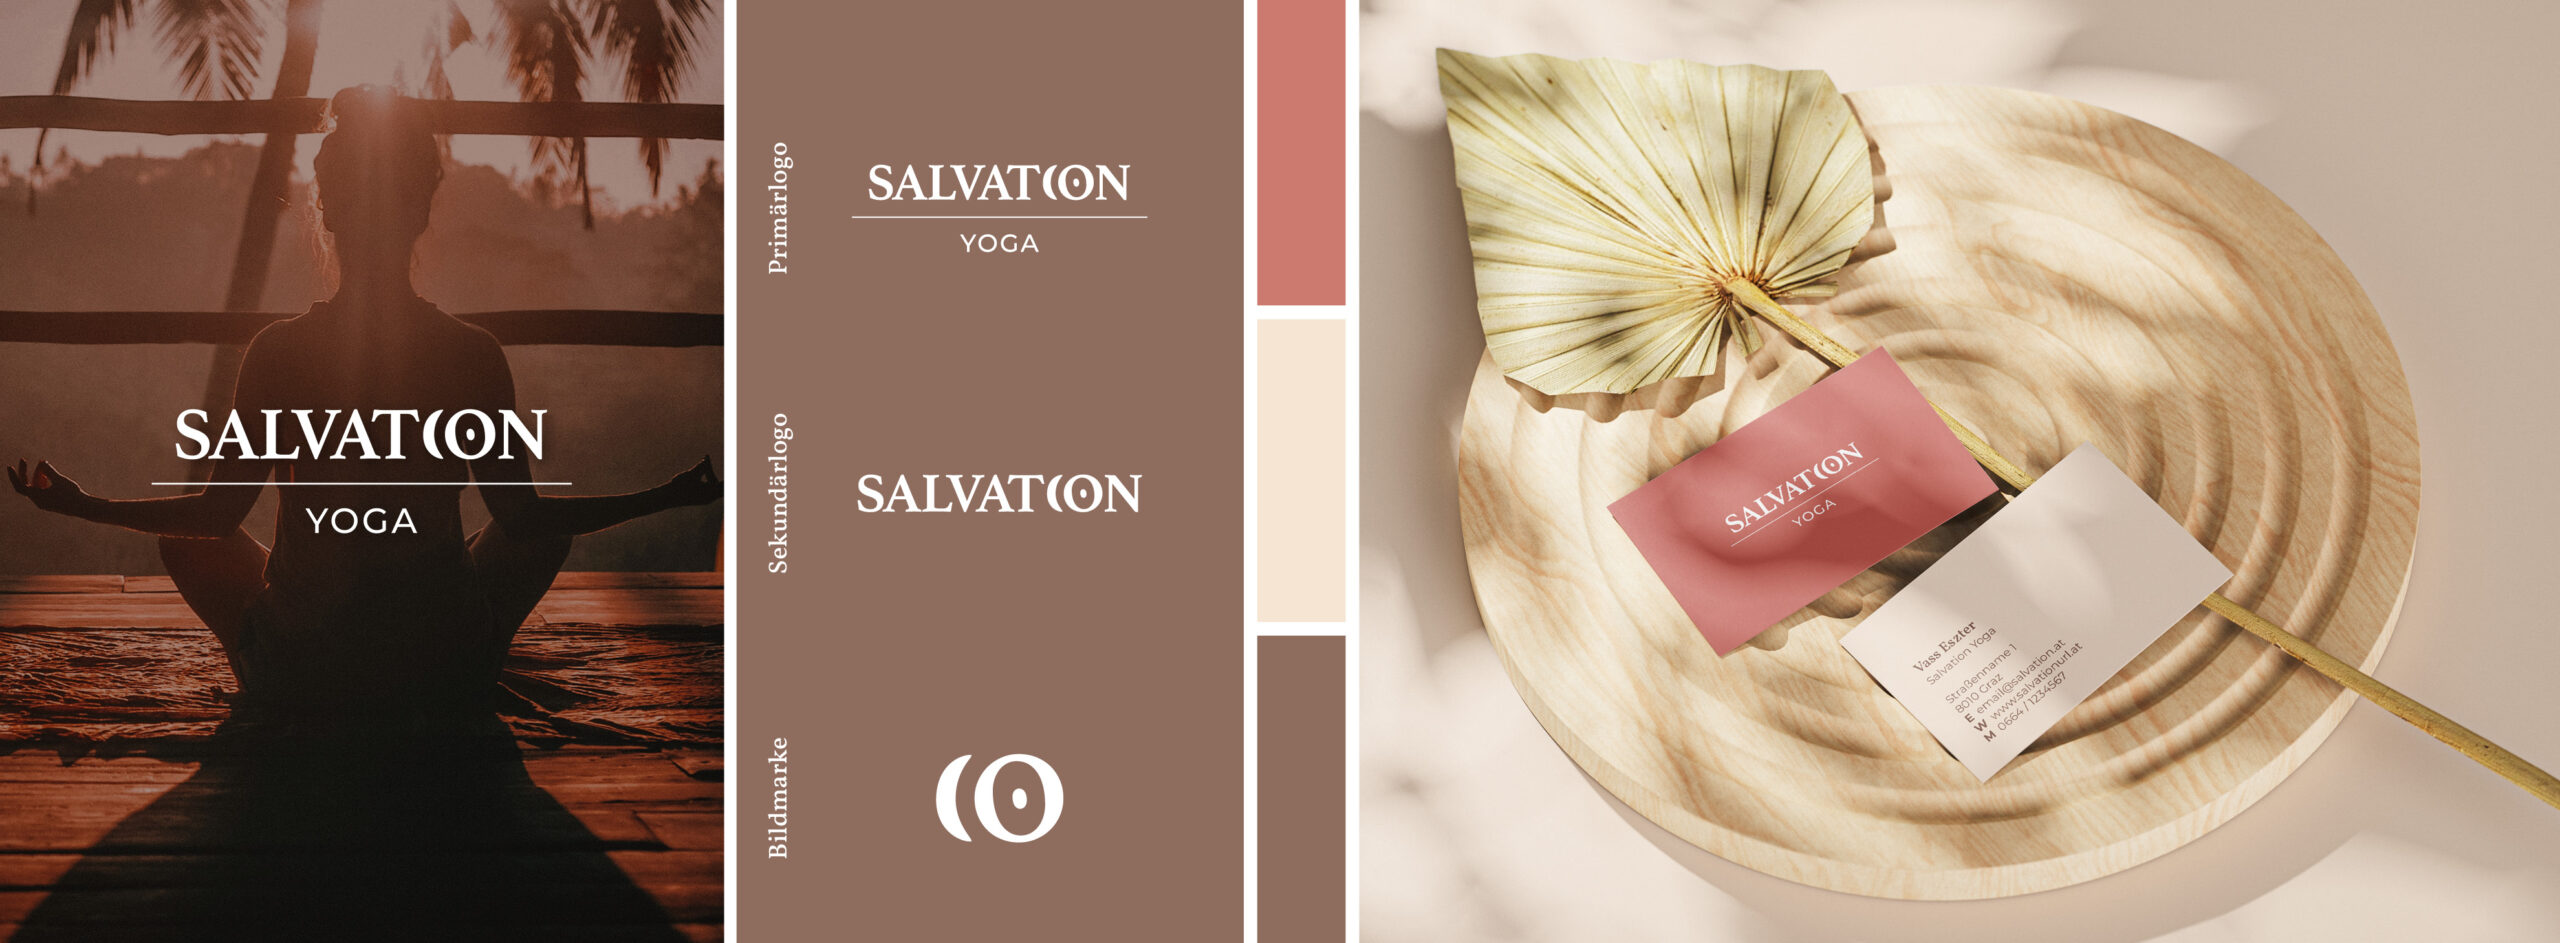 Branding Case Study - Logo Creation for Salvation Yoga - Brand Design by Corliss Design